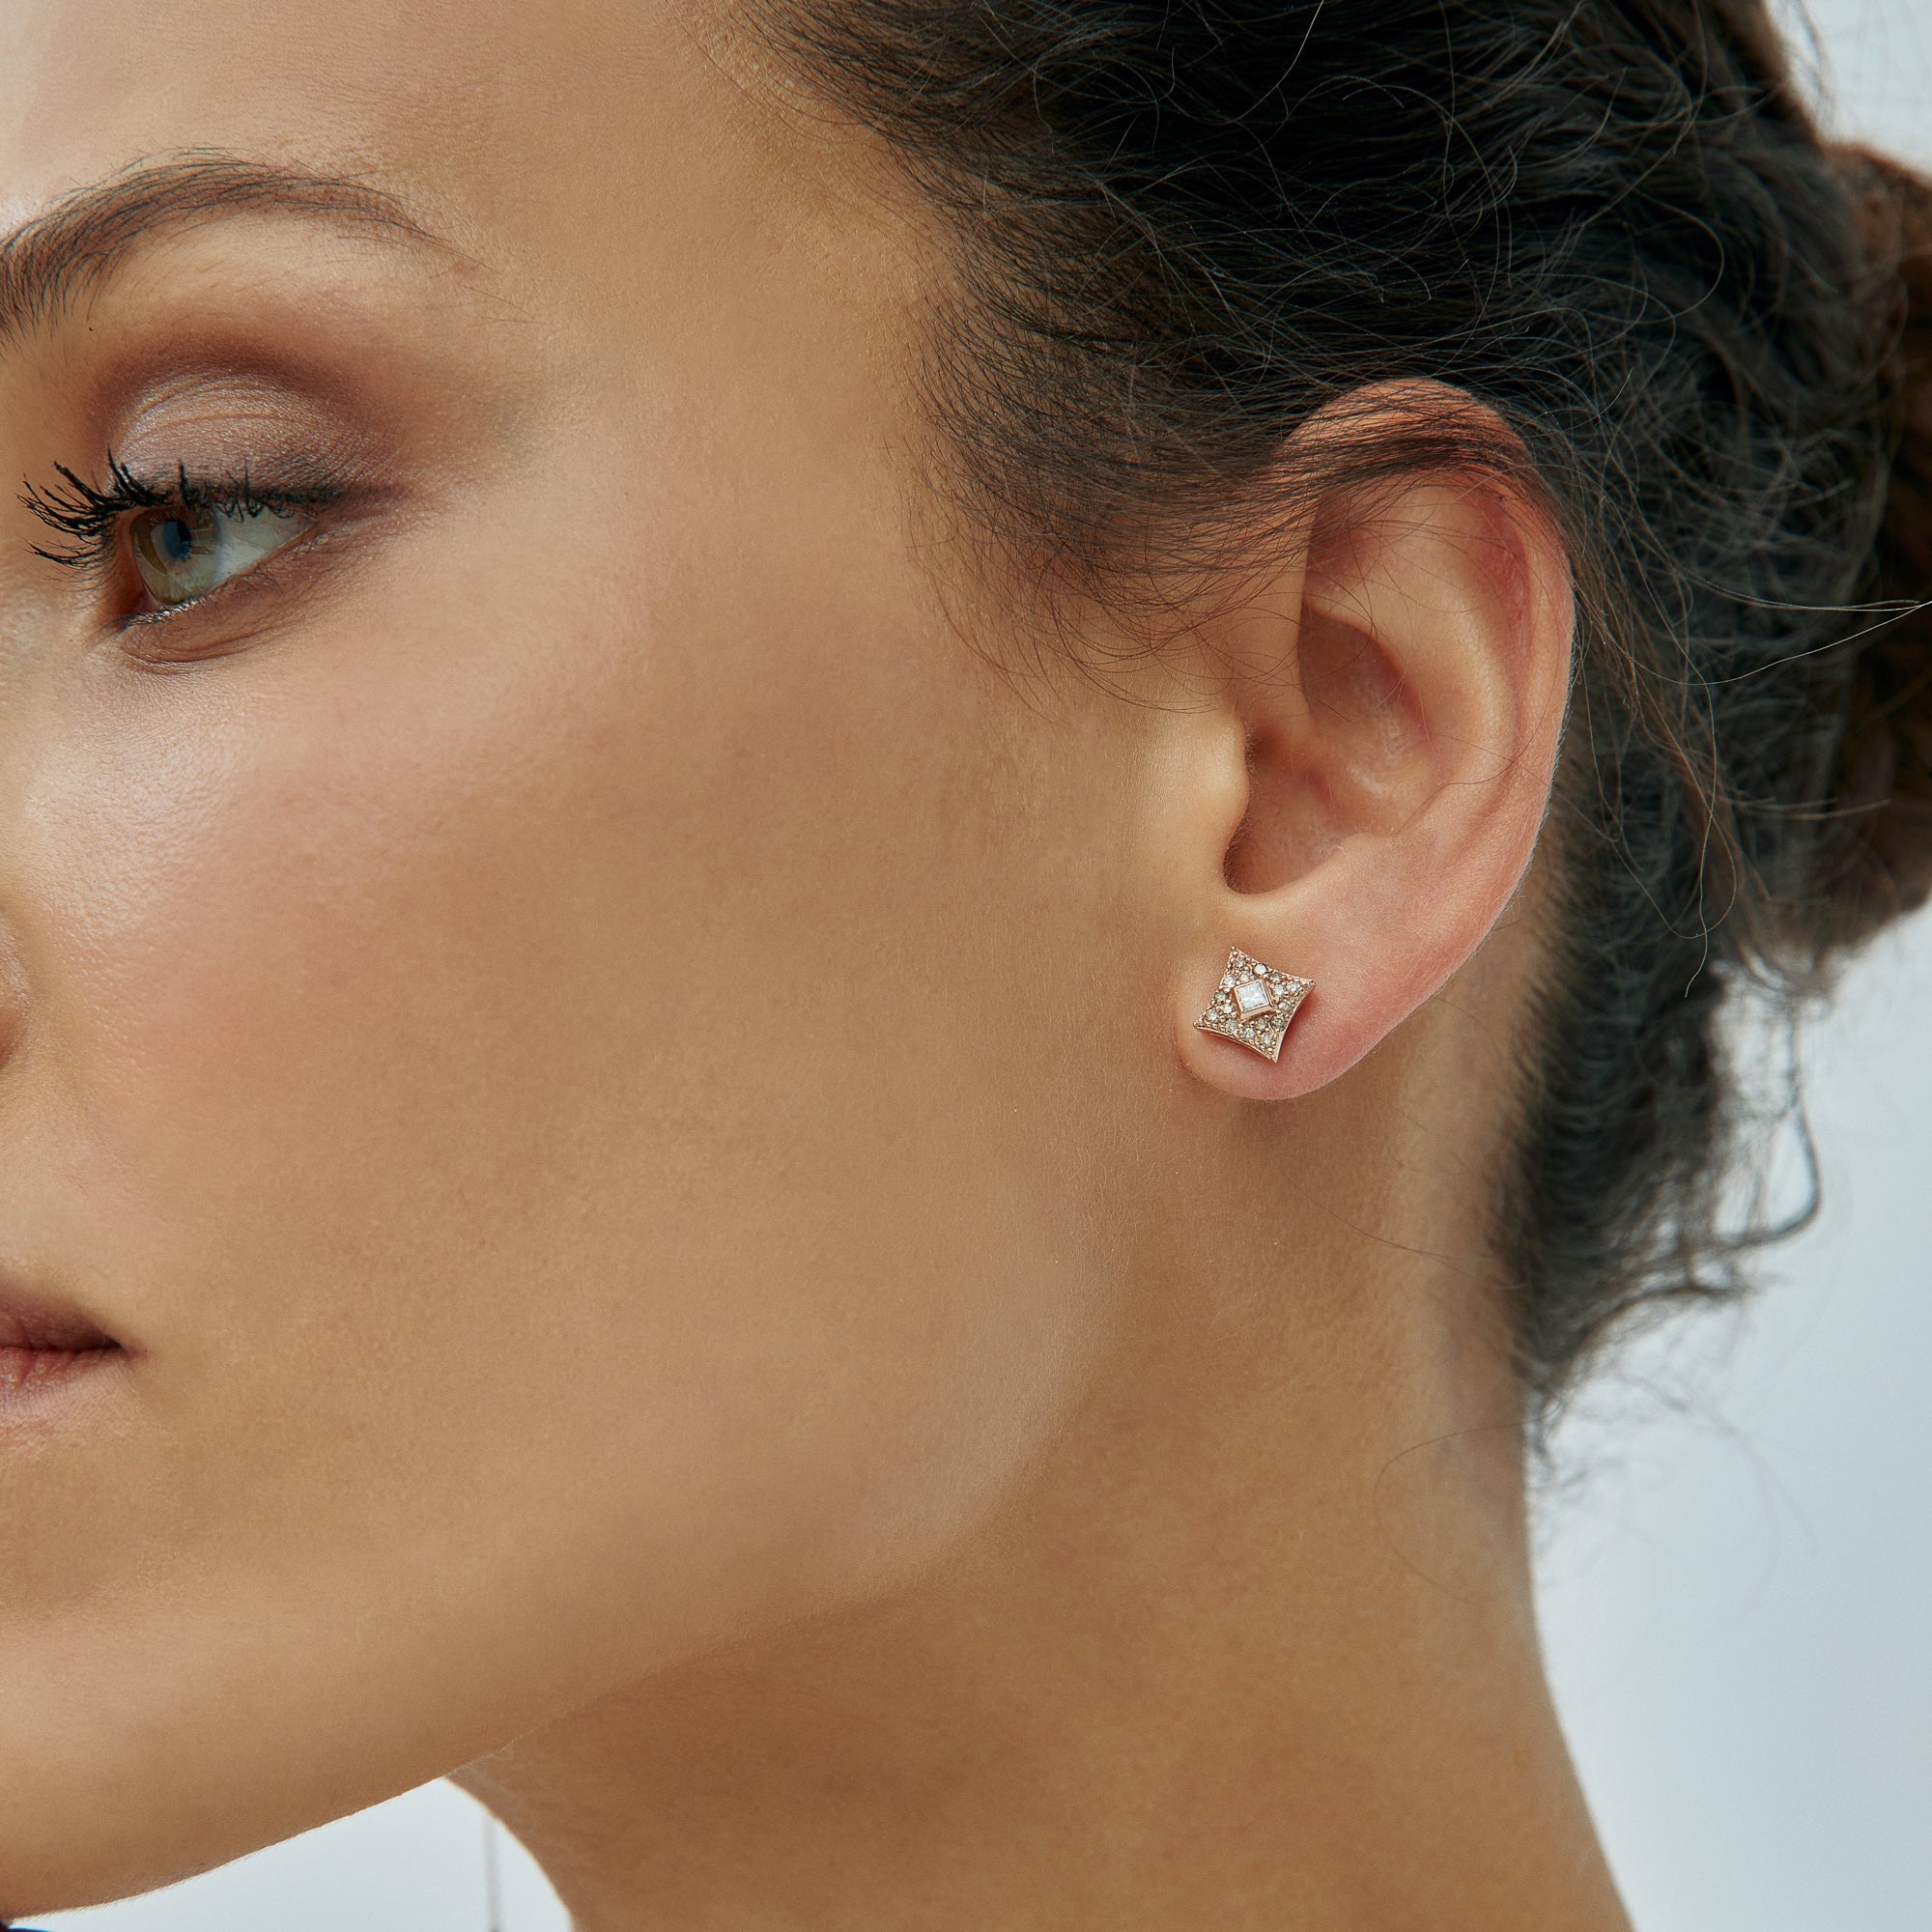 Diamond Star Stud Earring - Velovis & Co.